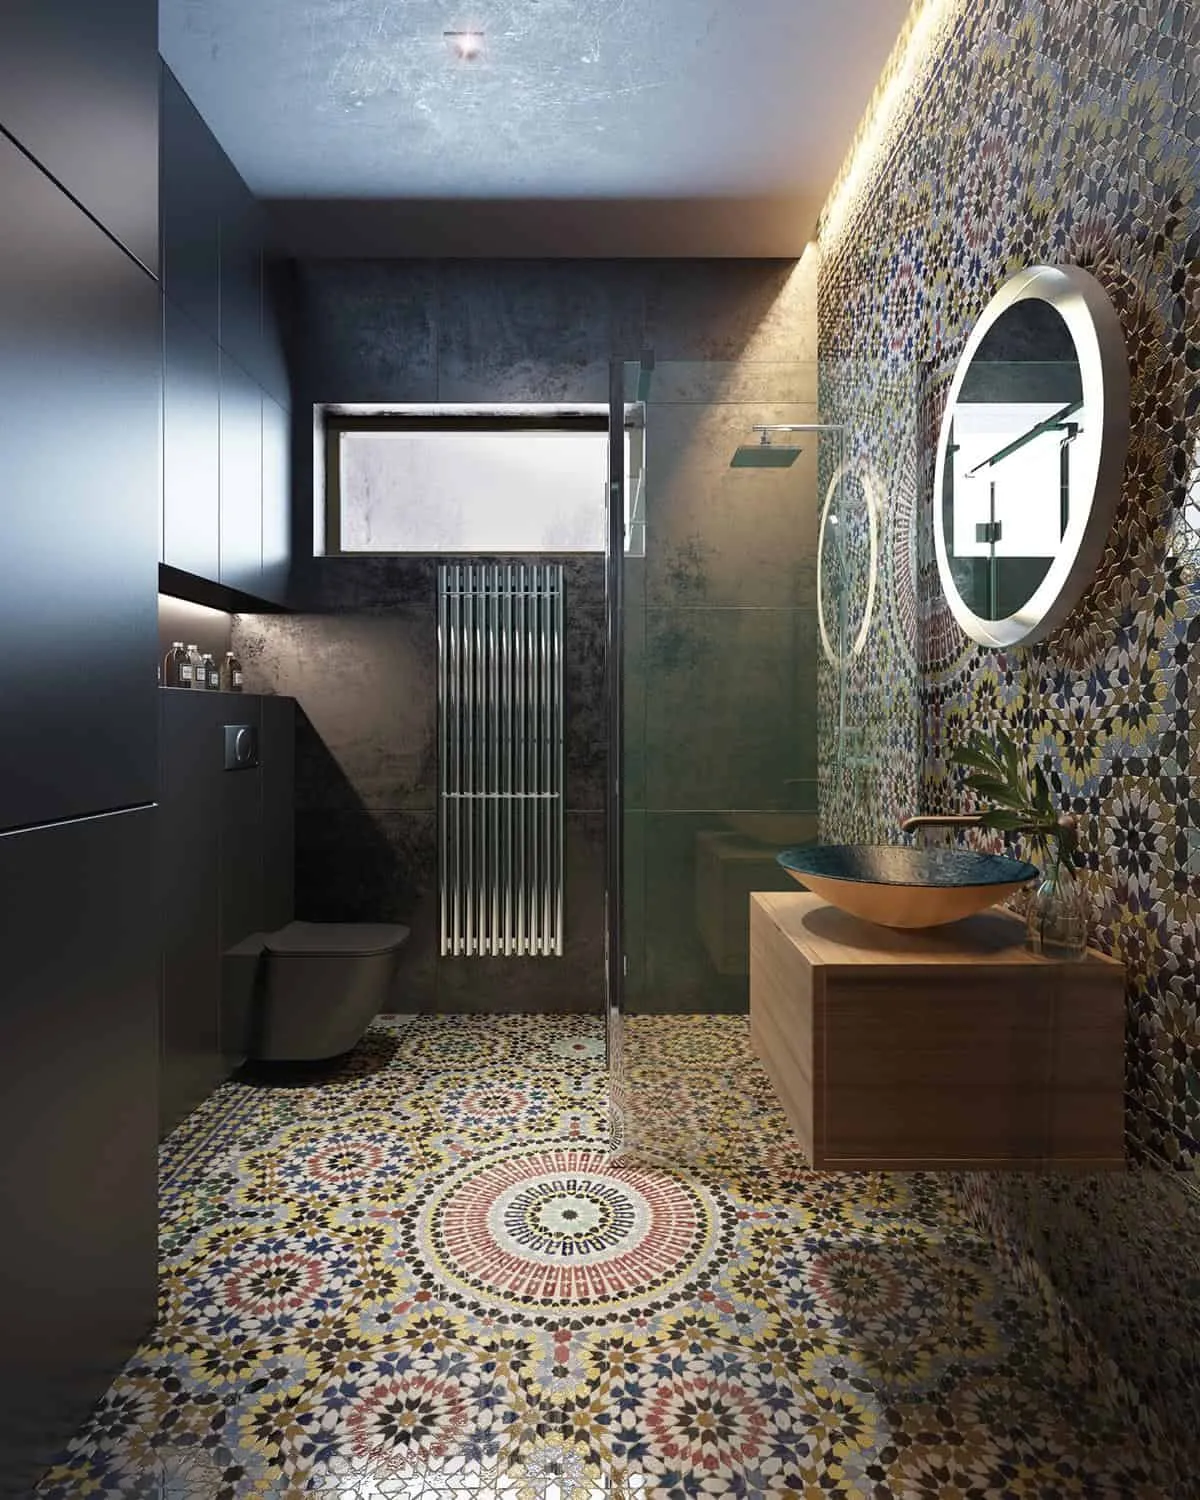 A nice bathroom design with printed slabs on wall and floor